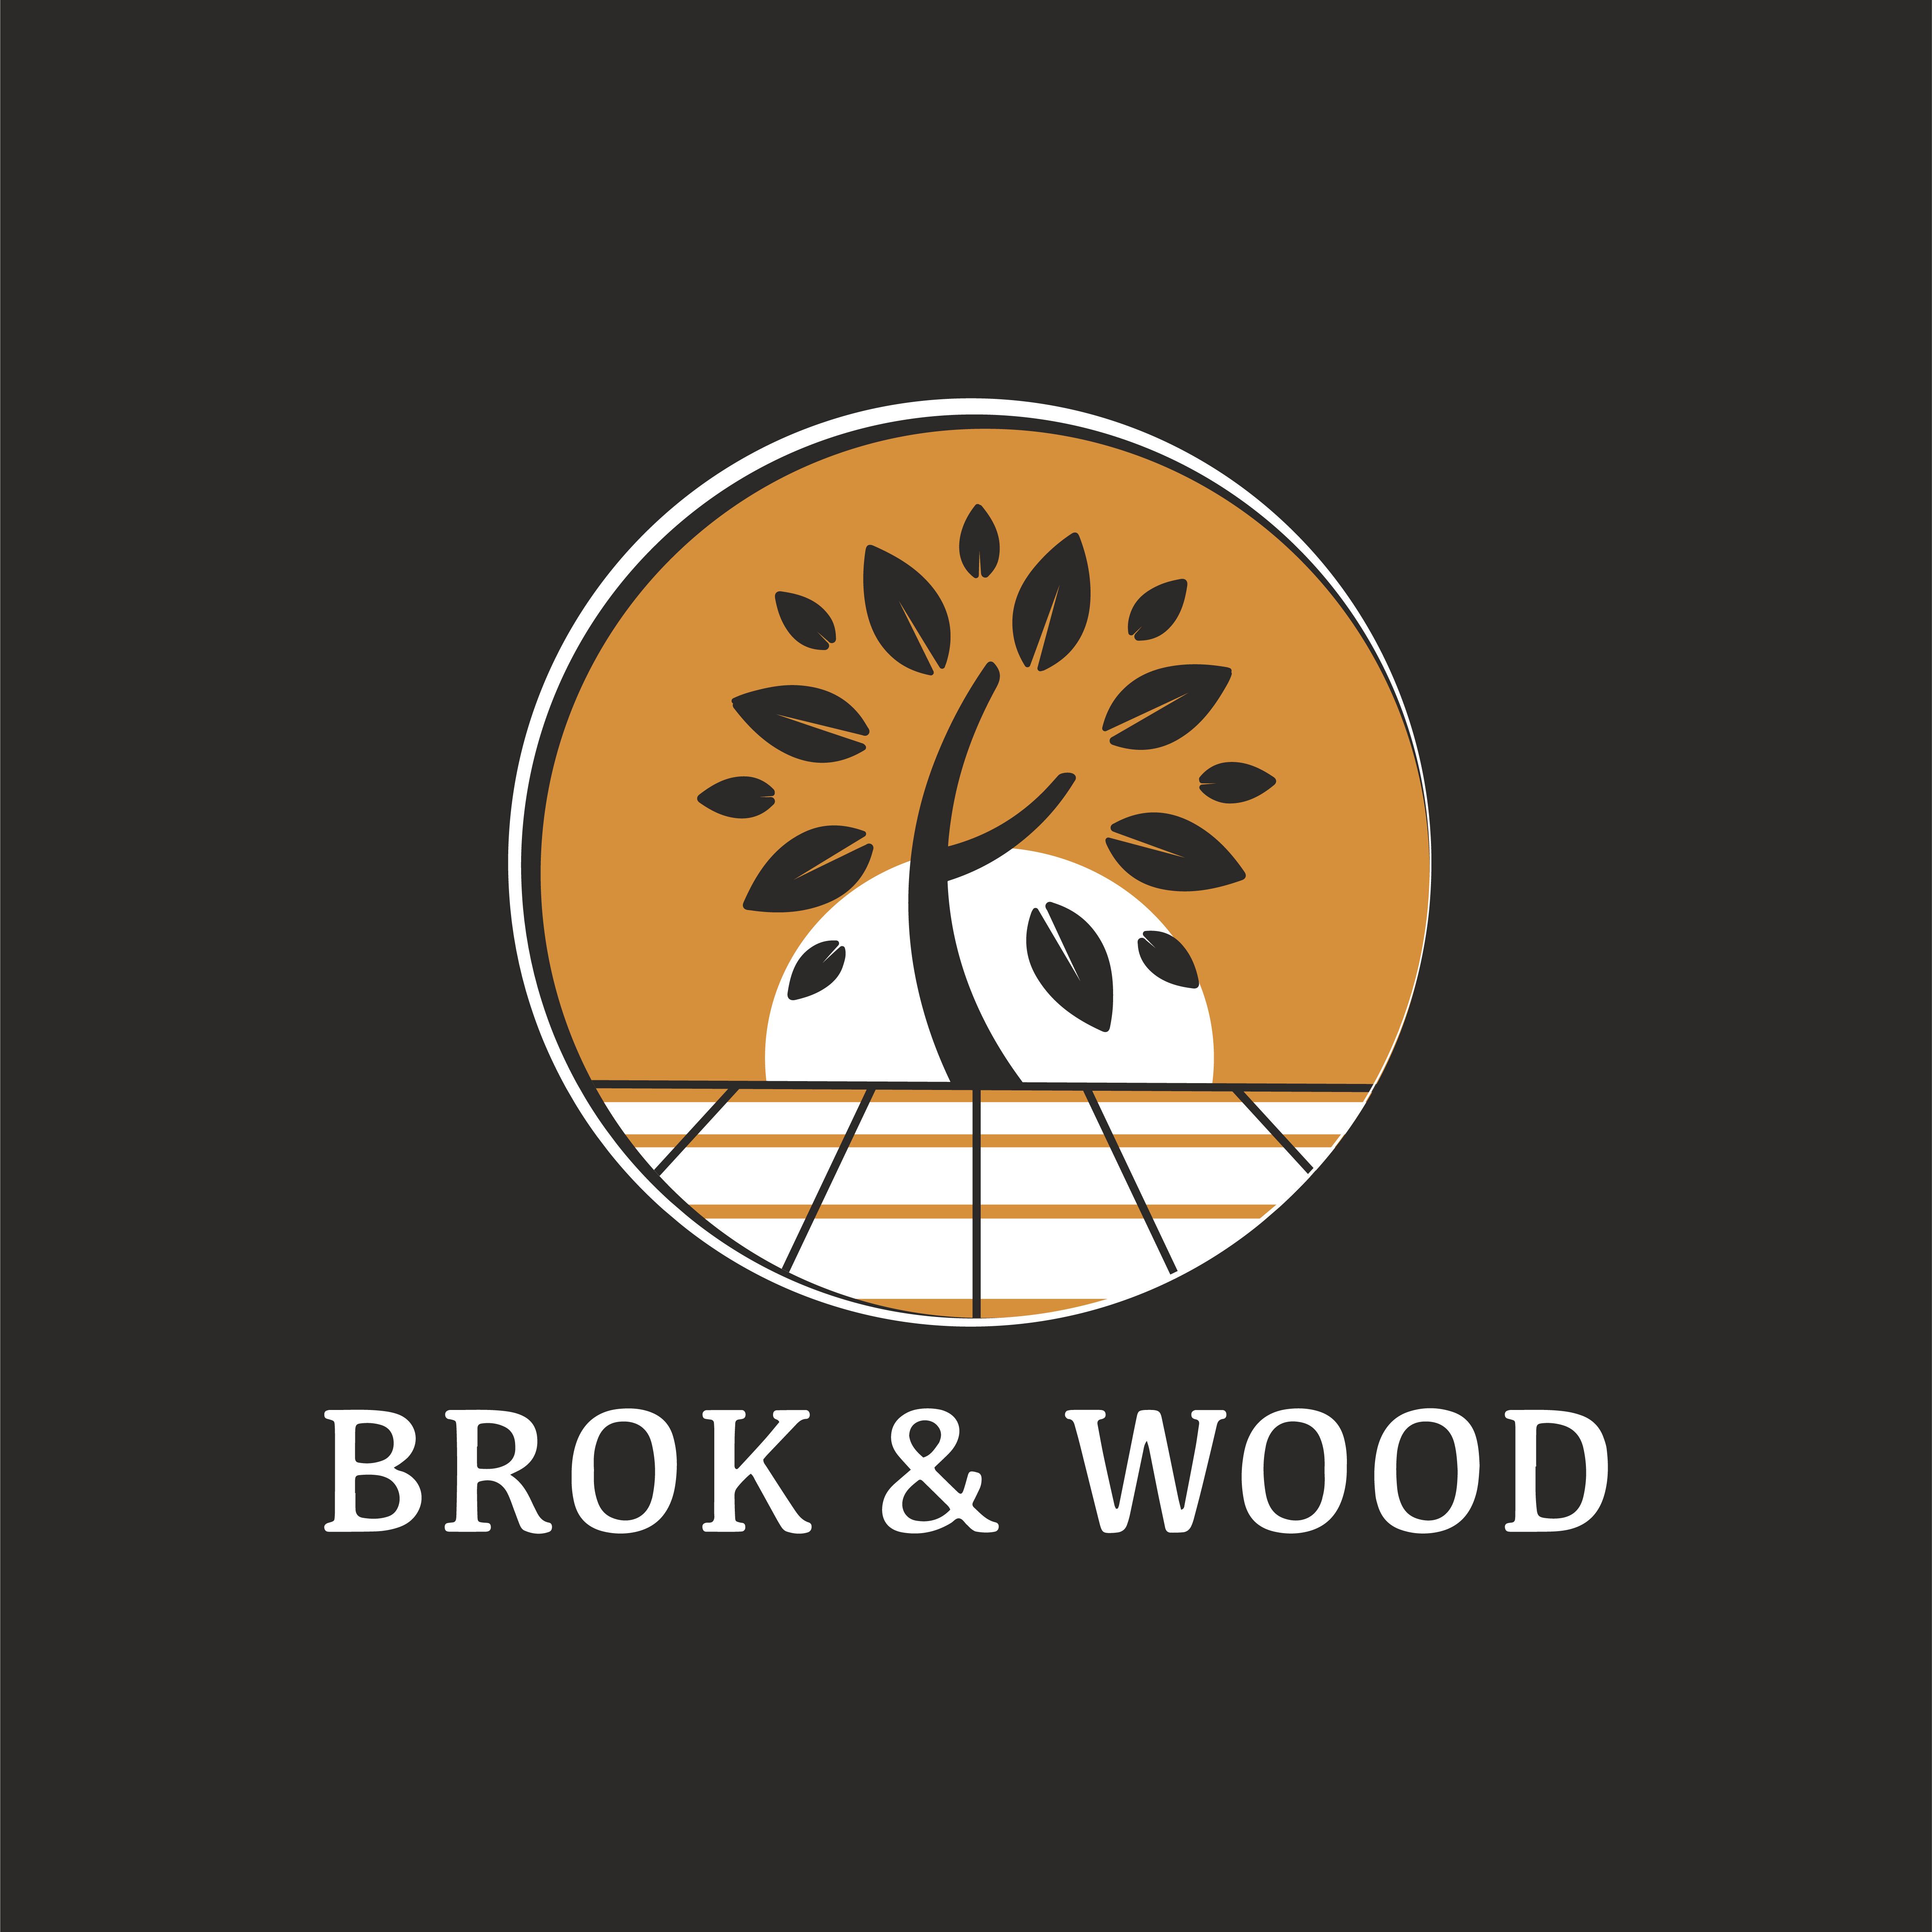 BROK & WOOD